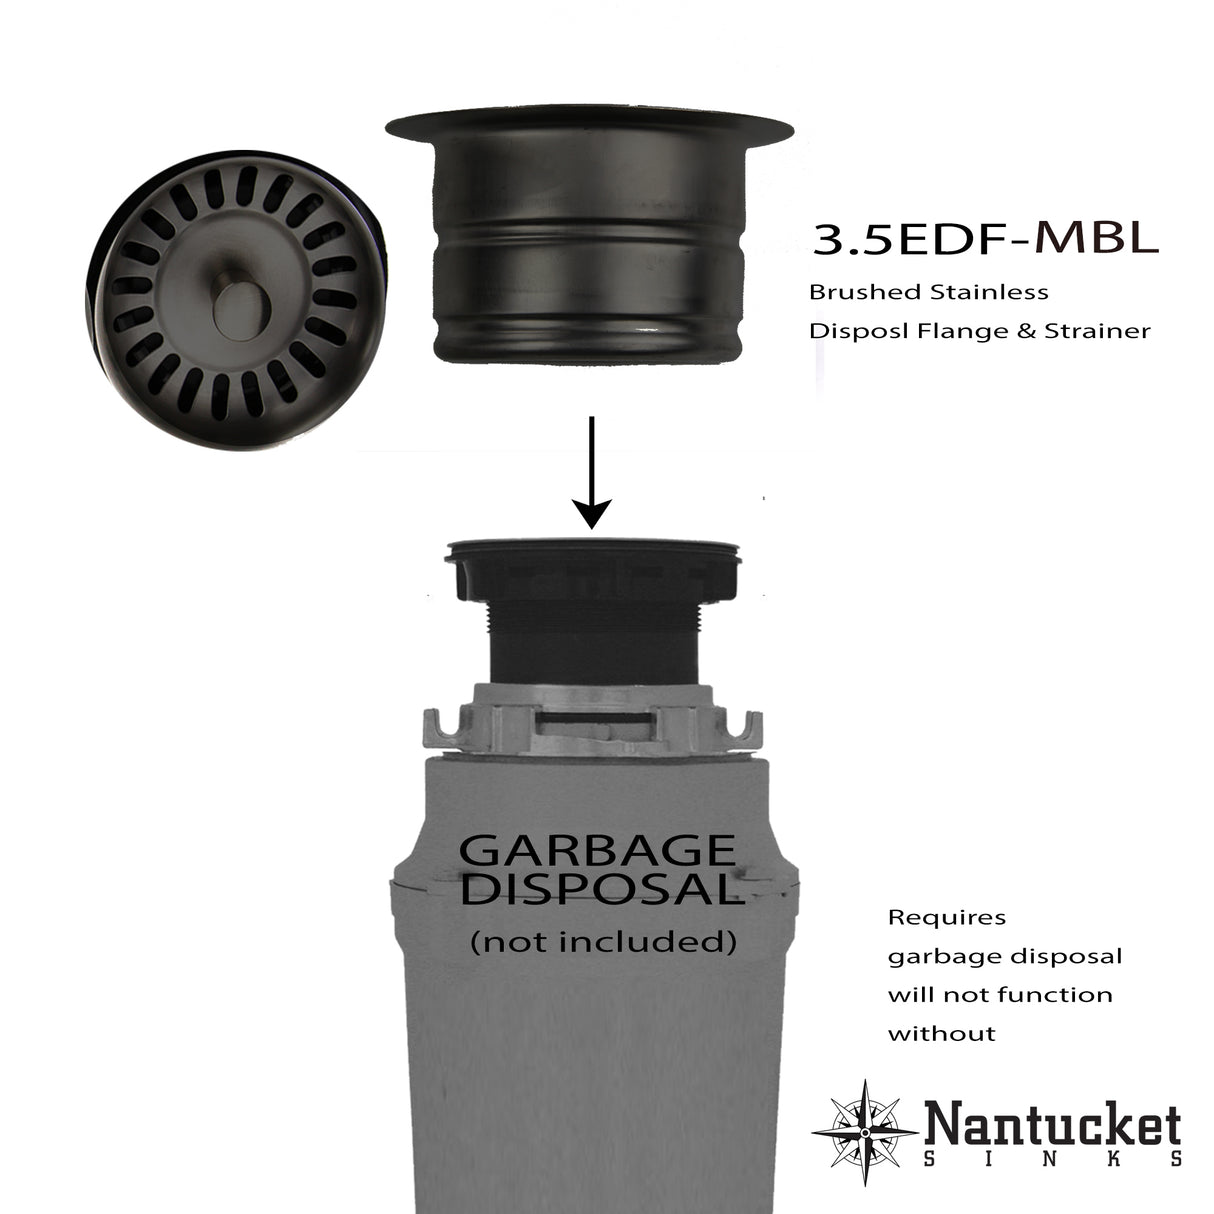 Nantucket Sink 3.5 Inch Extended Flange Disposal Kitchen Drain in Matte Black